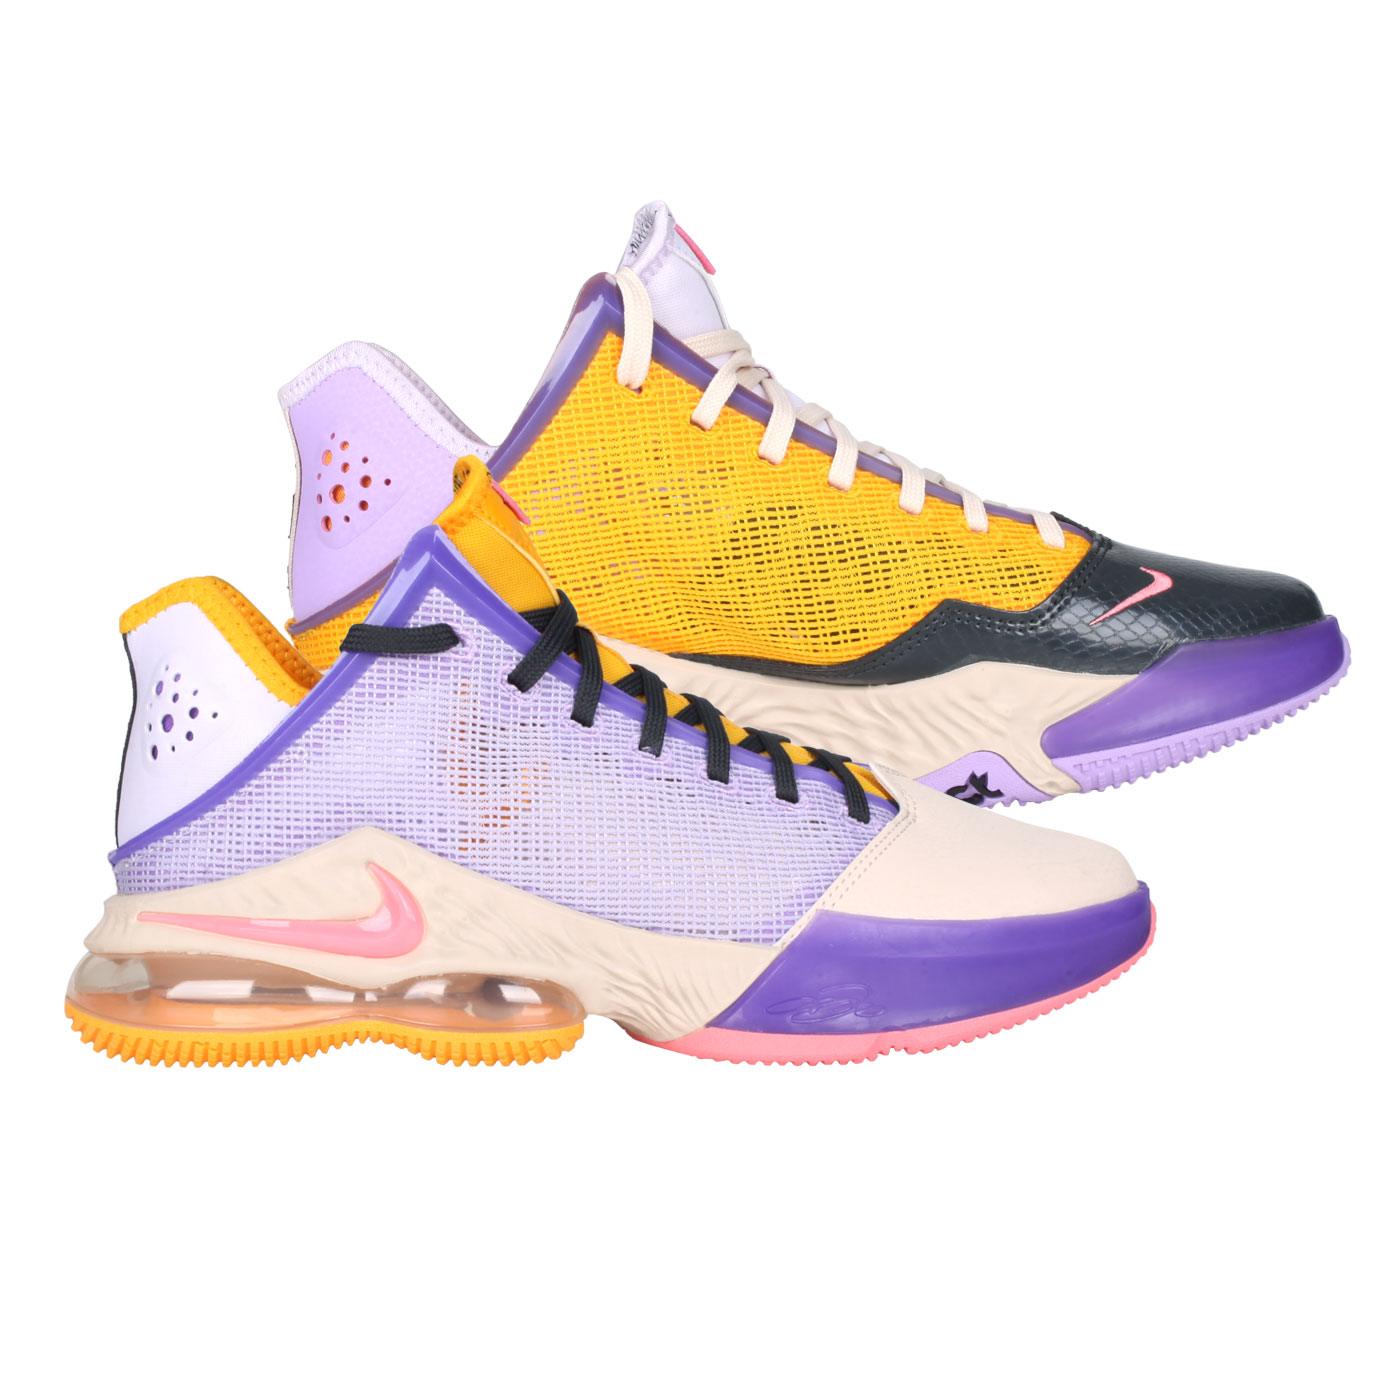 NIKE 男款籃球鞋  @LEBRON XIX LOW EP@DO9828-500 - 紫黃灰粉紅